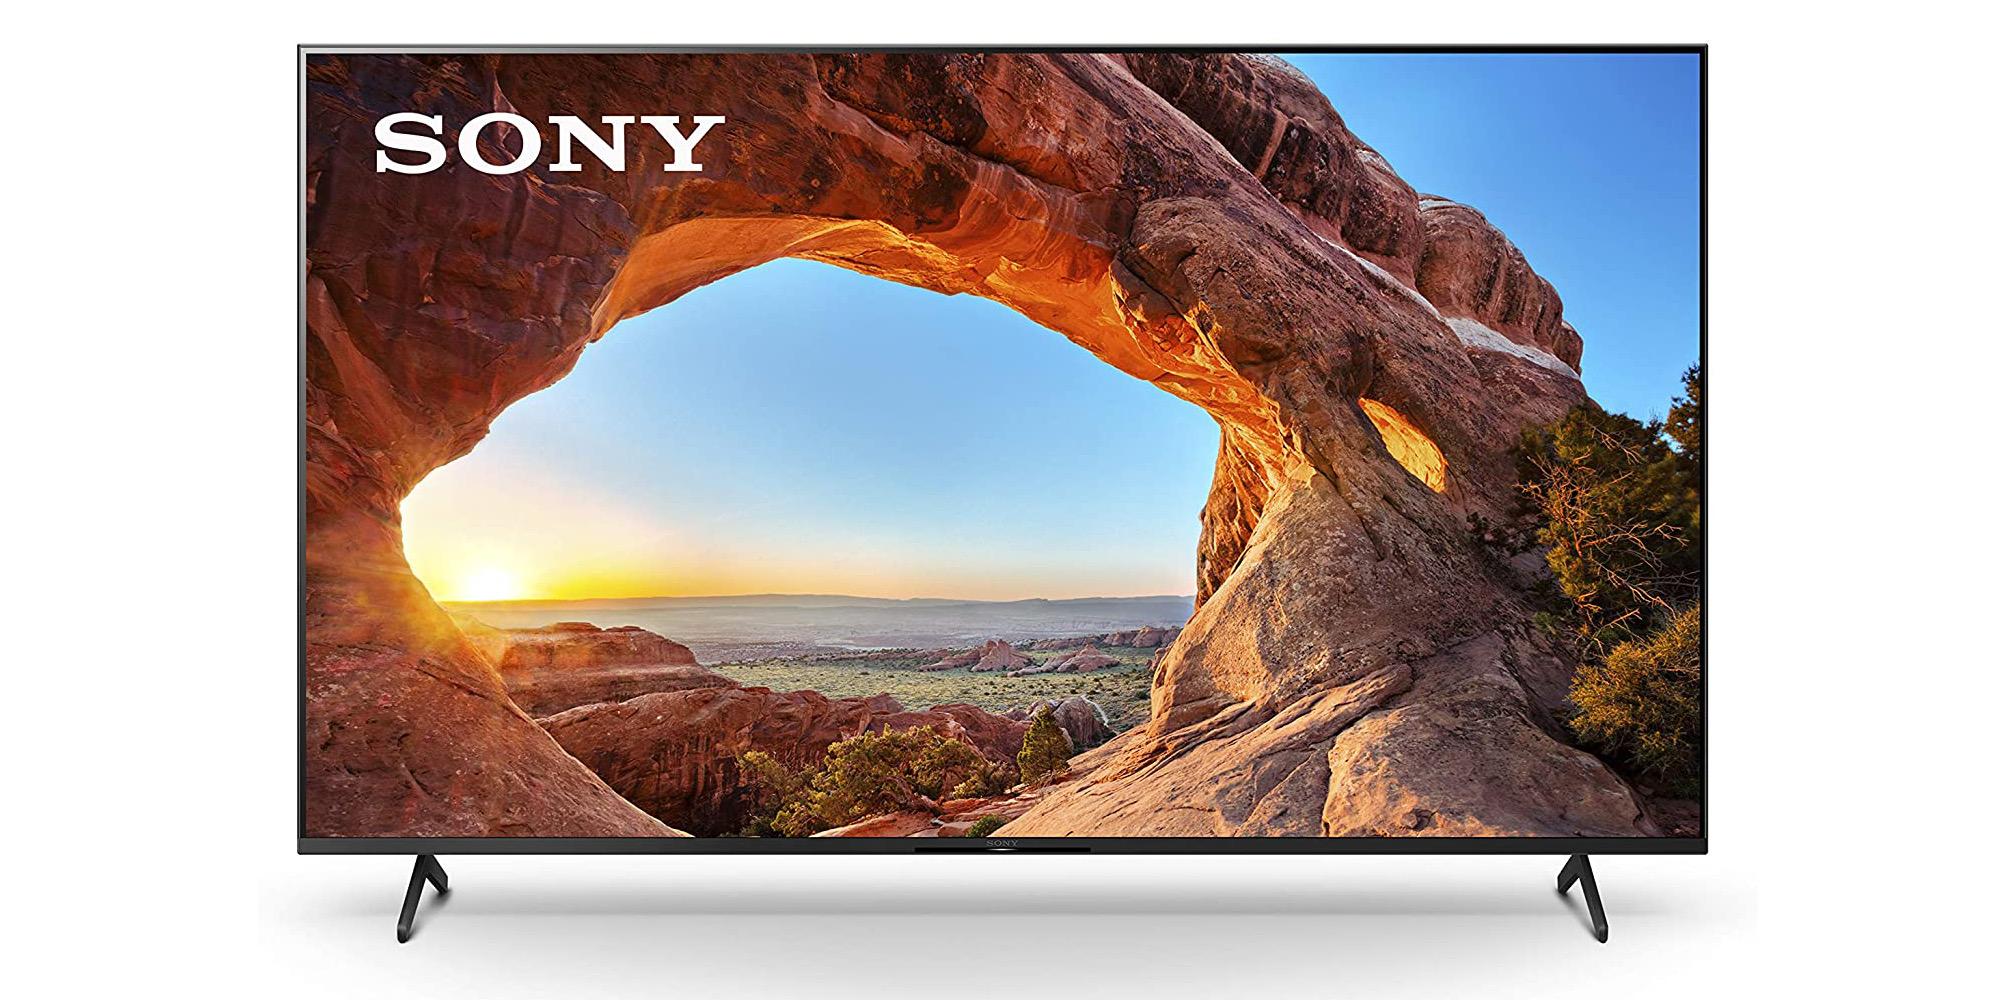 Телевизор kd 65x81j. Телевизор Sony kd85x85tj. Sony KD 43x85j. Телевизор Sony KD-55x85tj. Телевизор Sony KD-65x9305c 65" (2015).